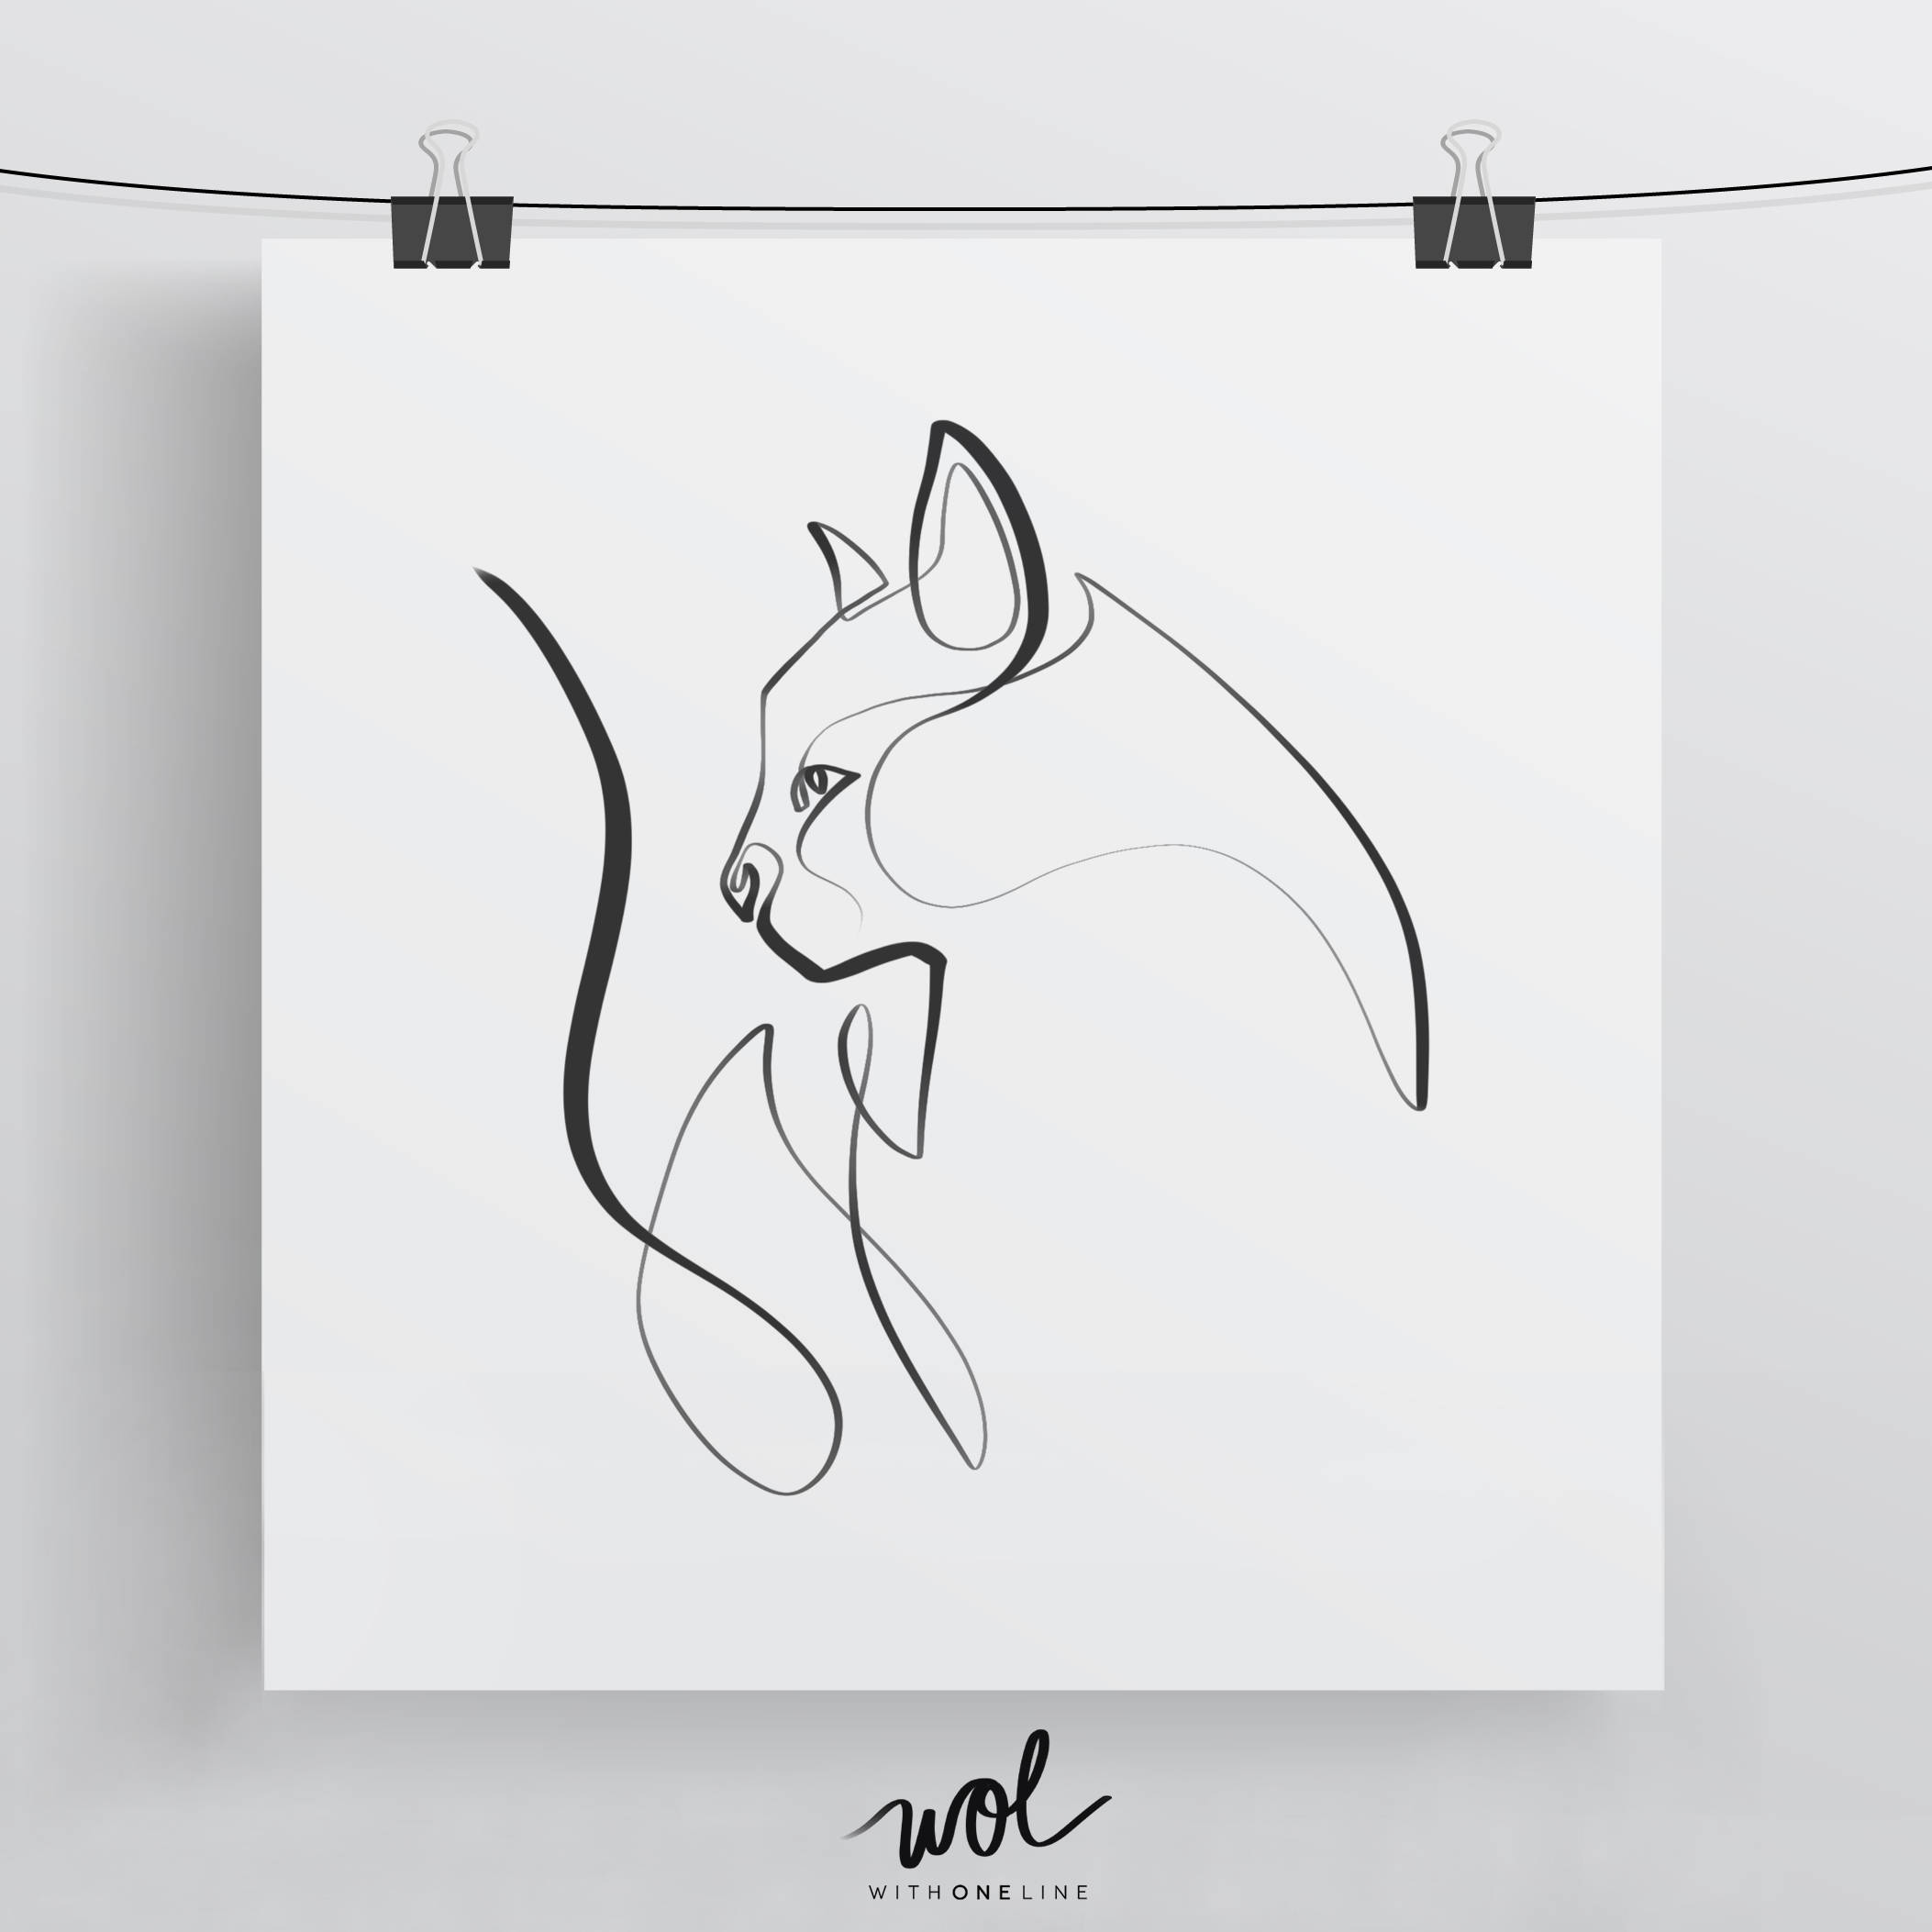 cat drawing